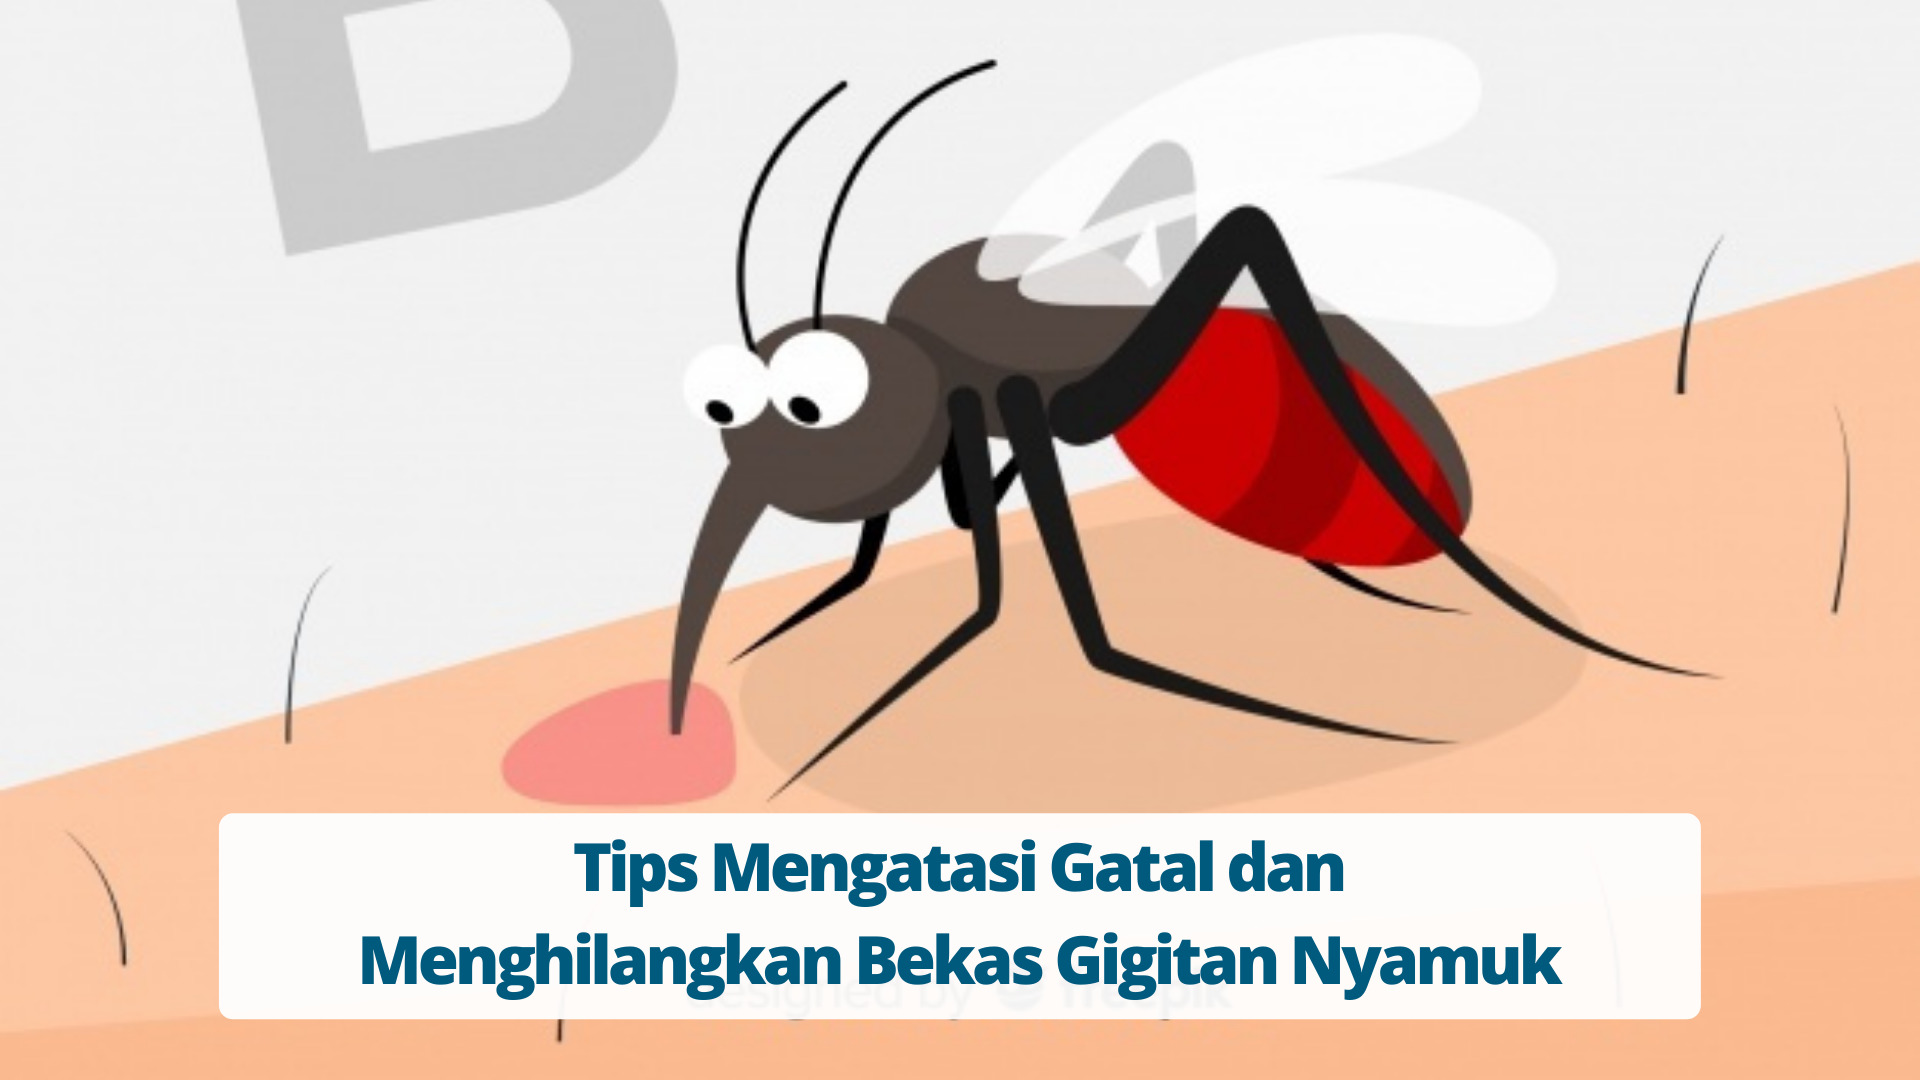 Tips Mengatasi Gatal dan Menghilangkan Bekas Gigitan Nyamuk